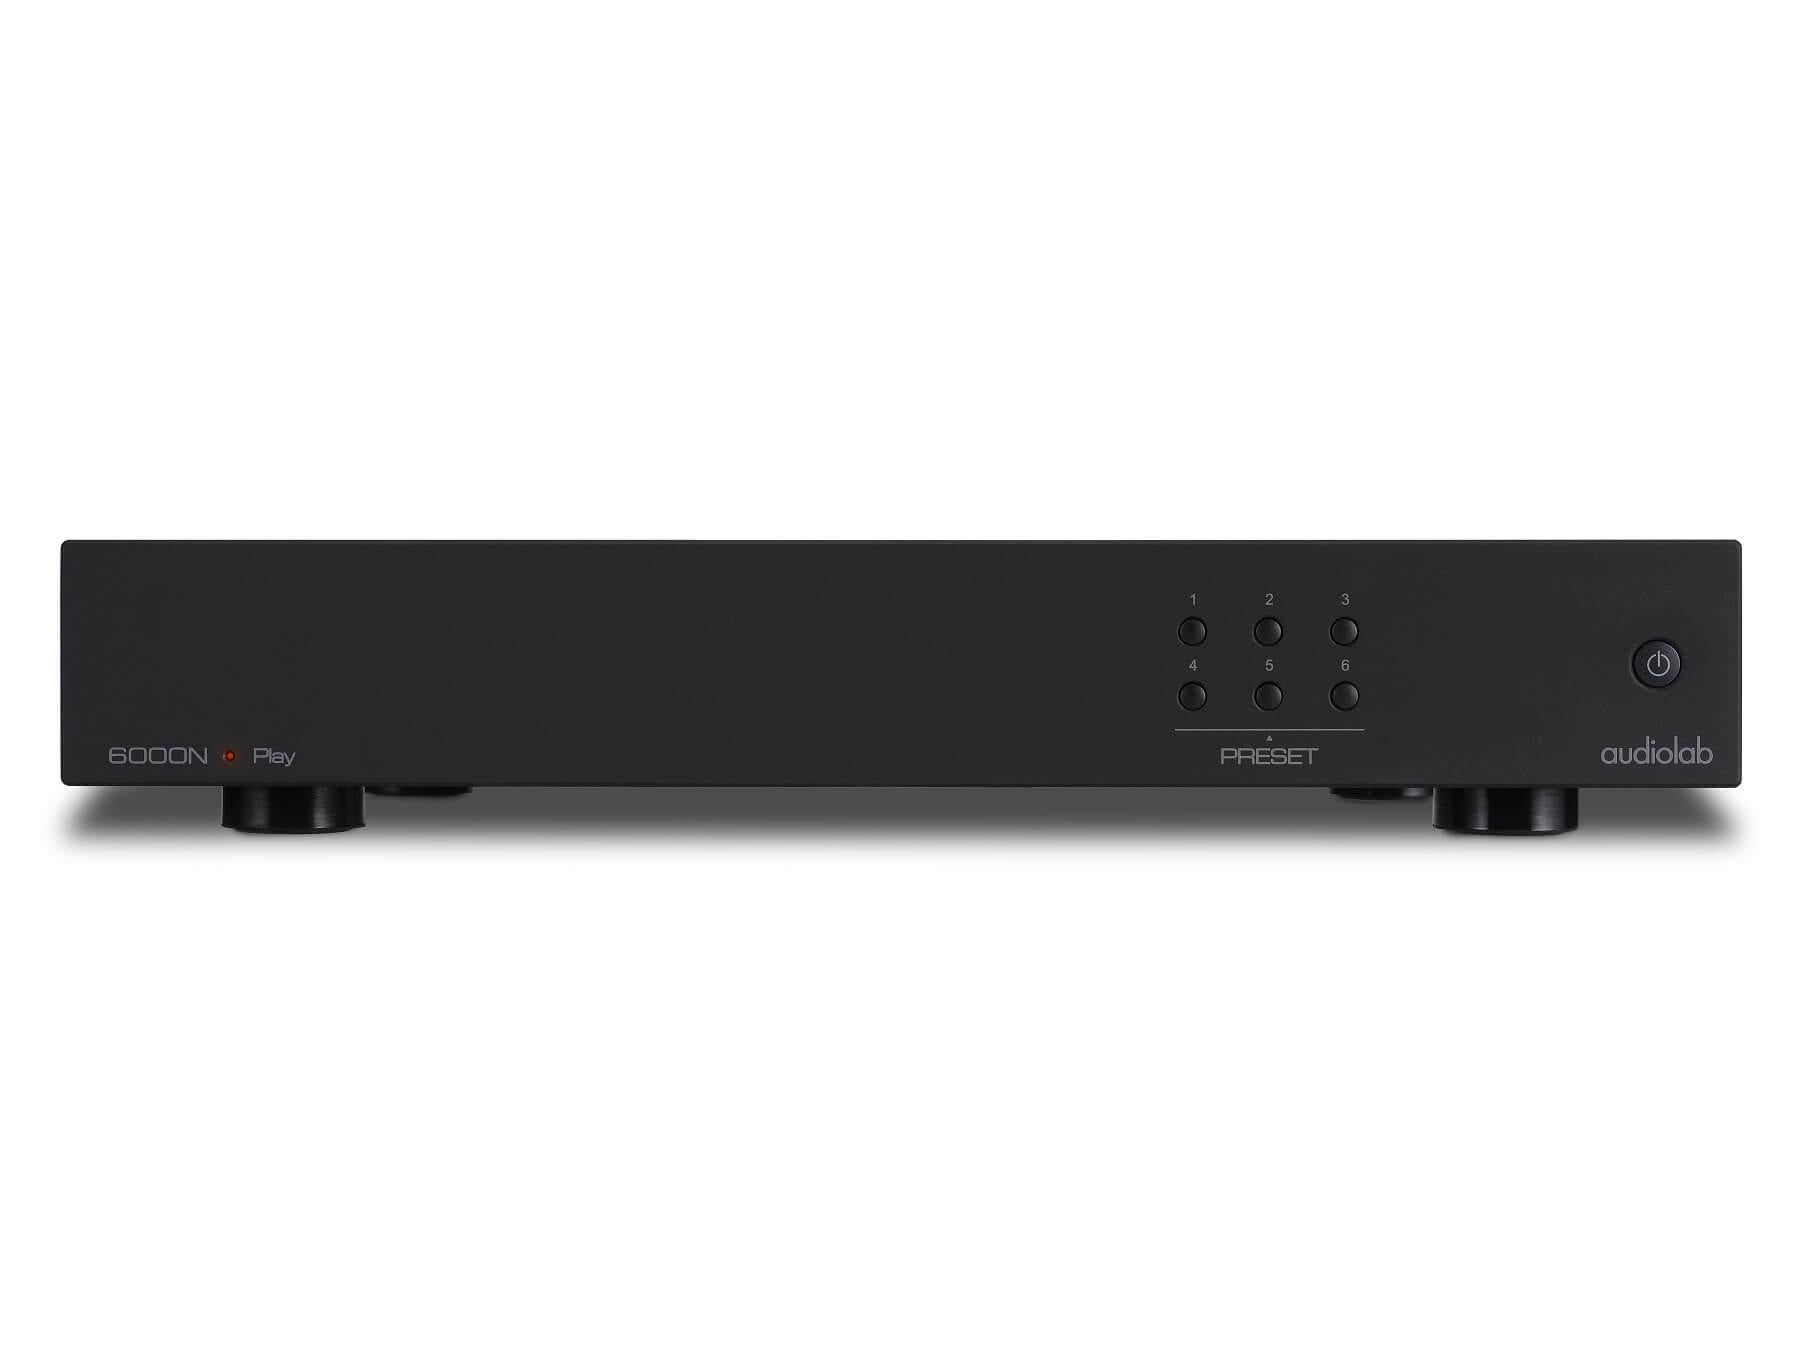 AudioLab 6000N Play - Wireless Hi-Fi Streamer - Black